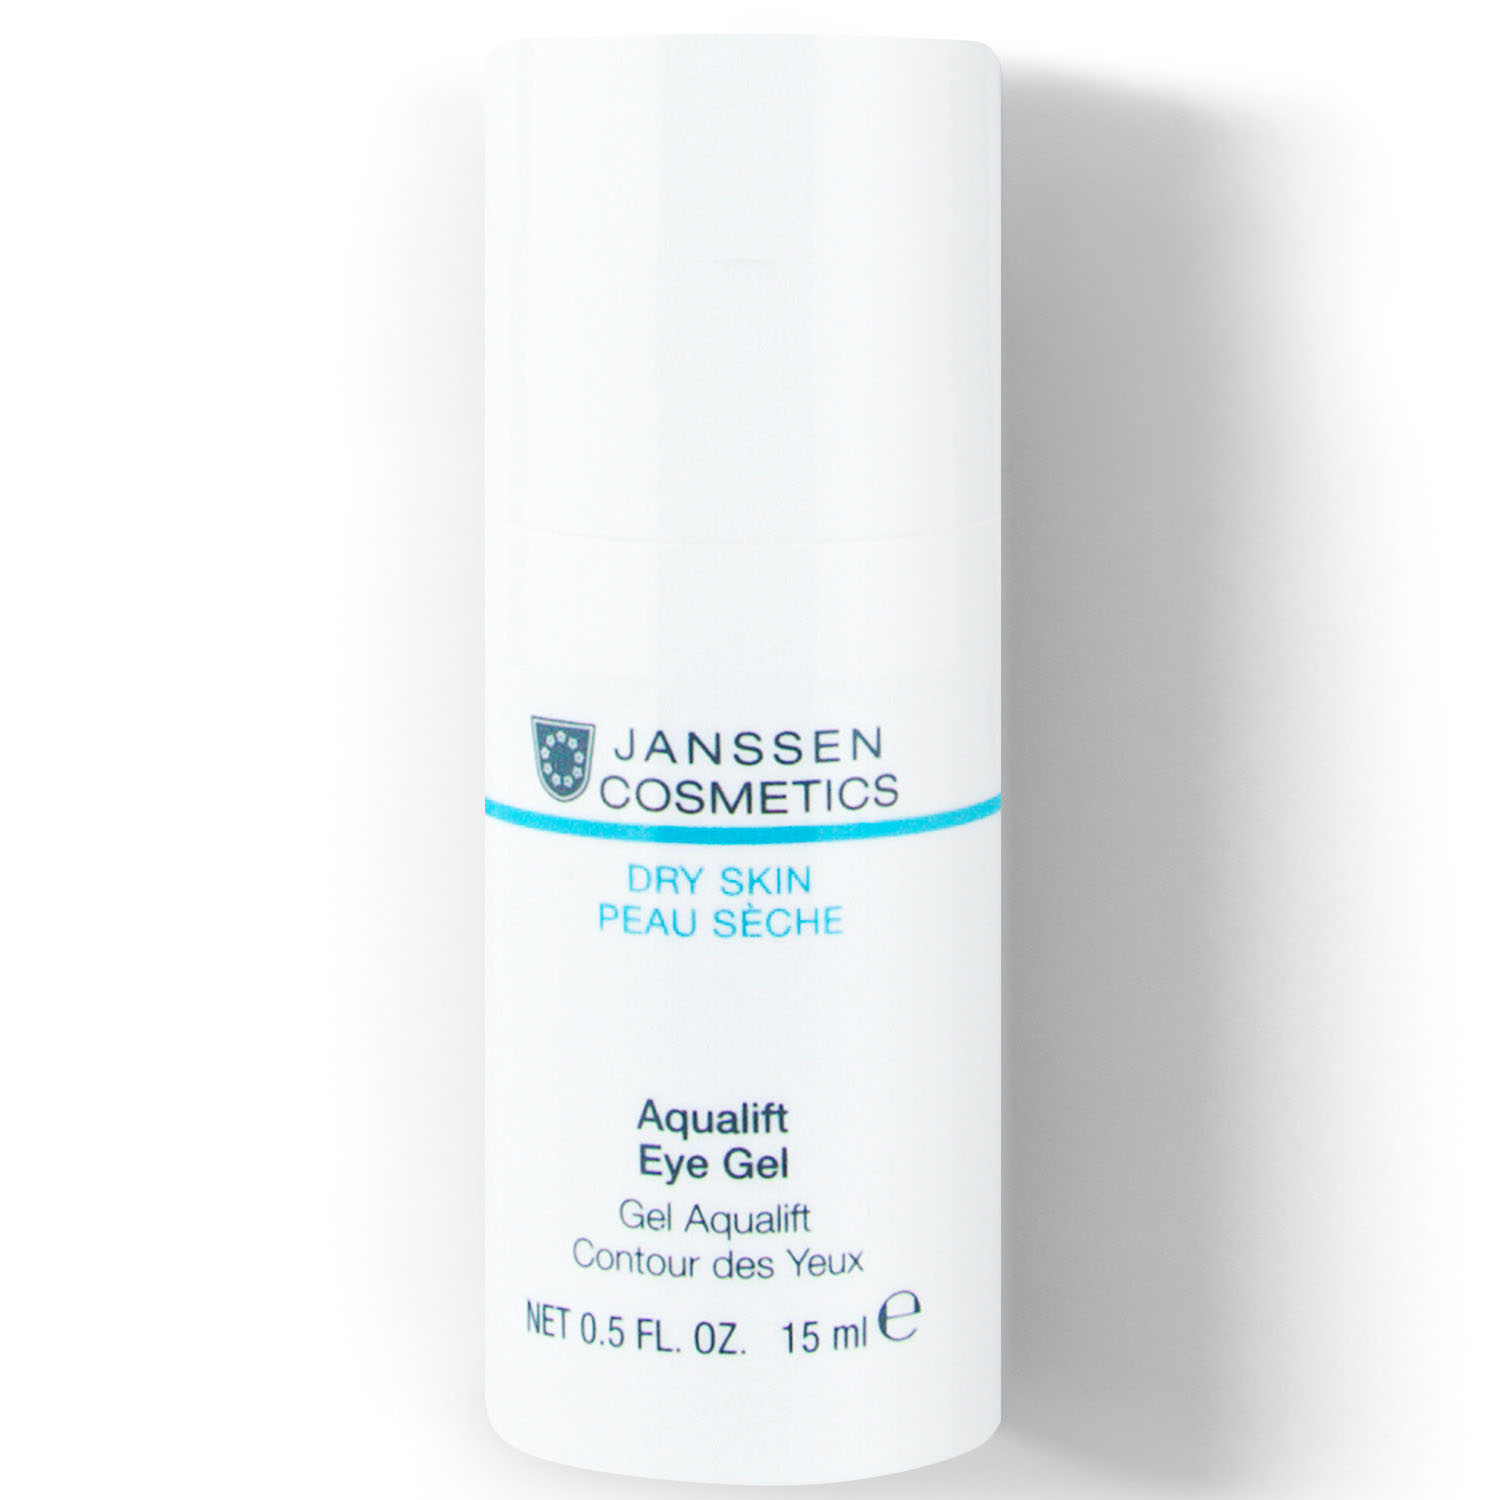 Janssen Cosmetics Ультраувлажняющий лифтинг-гель для контура глаз Aqualift Eye Gel, 15 мл (Janssen Cosmetics, Dry Skin) лифтинг гель для контура глаз ультраувлажняющий 15 мл